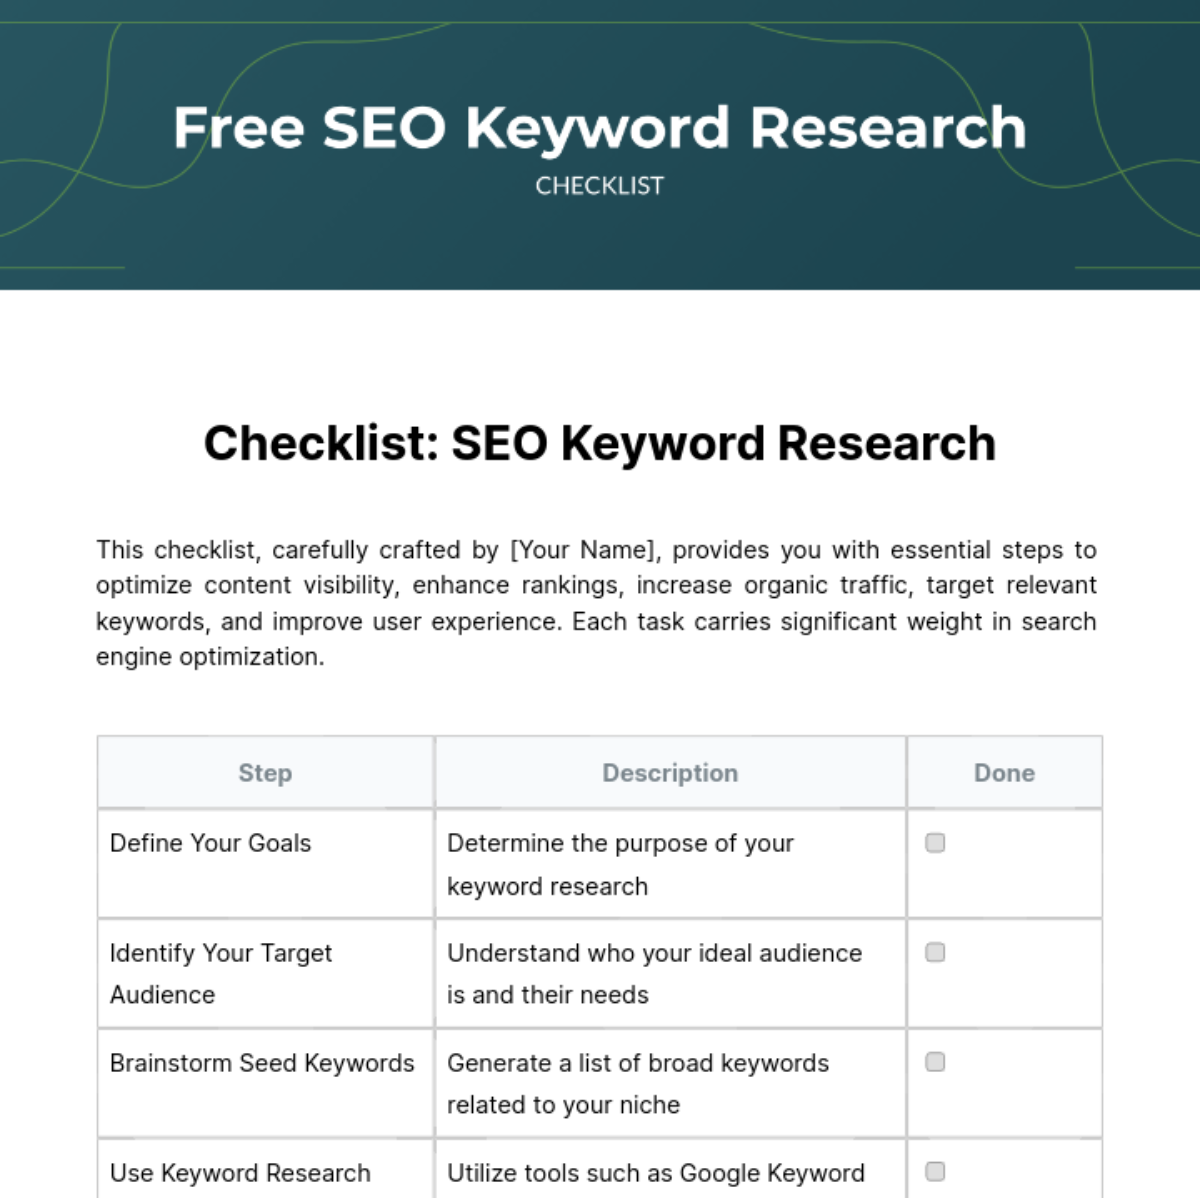 Free SEO Keyword Research Checklist Template